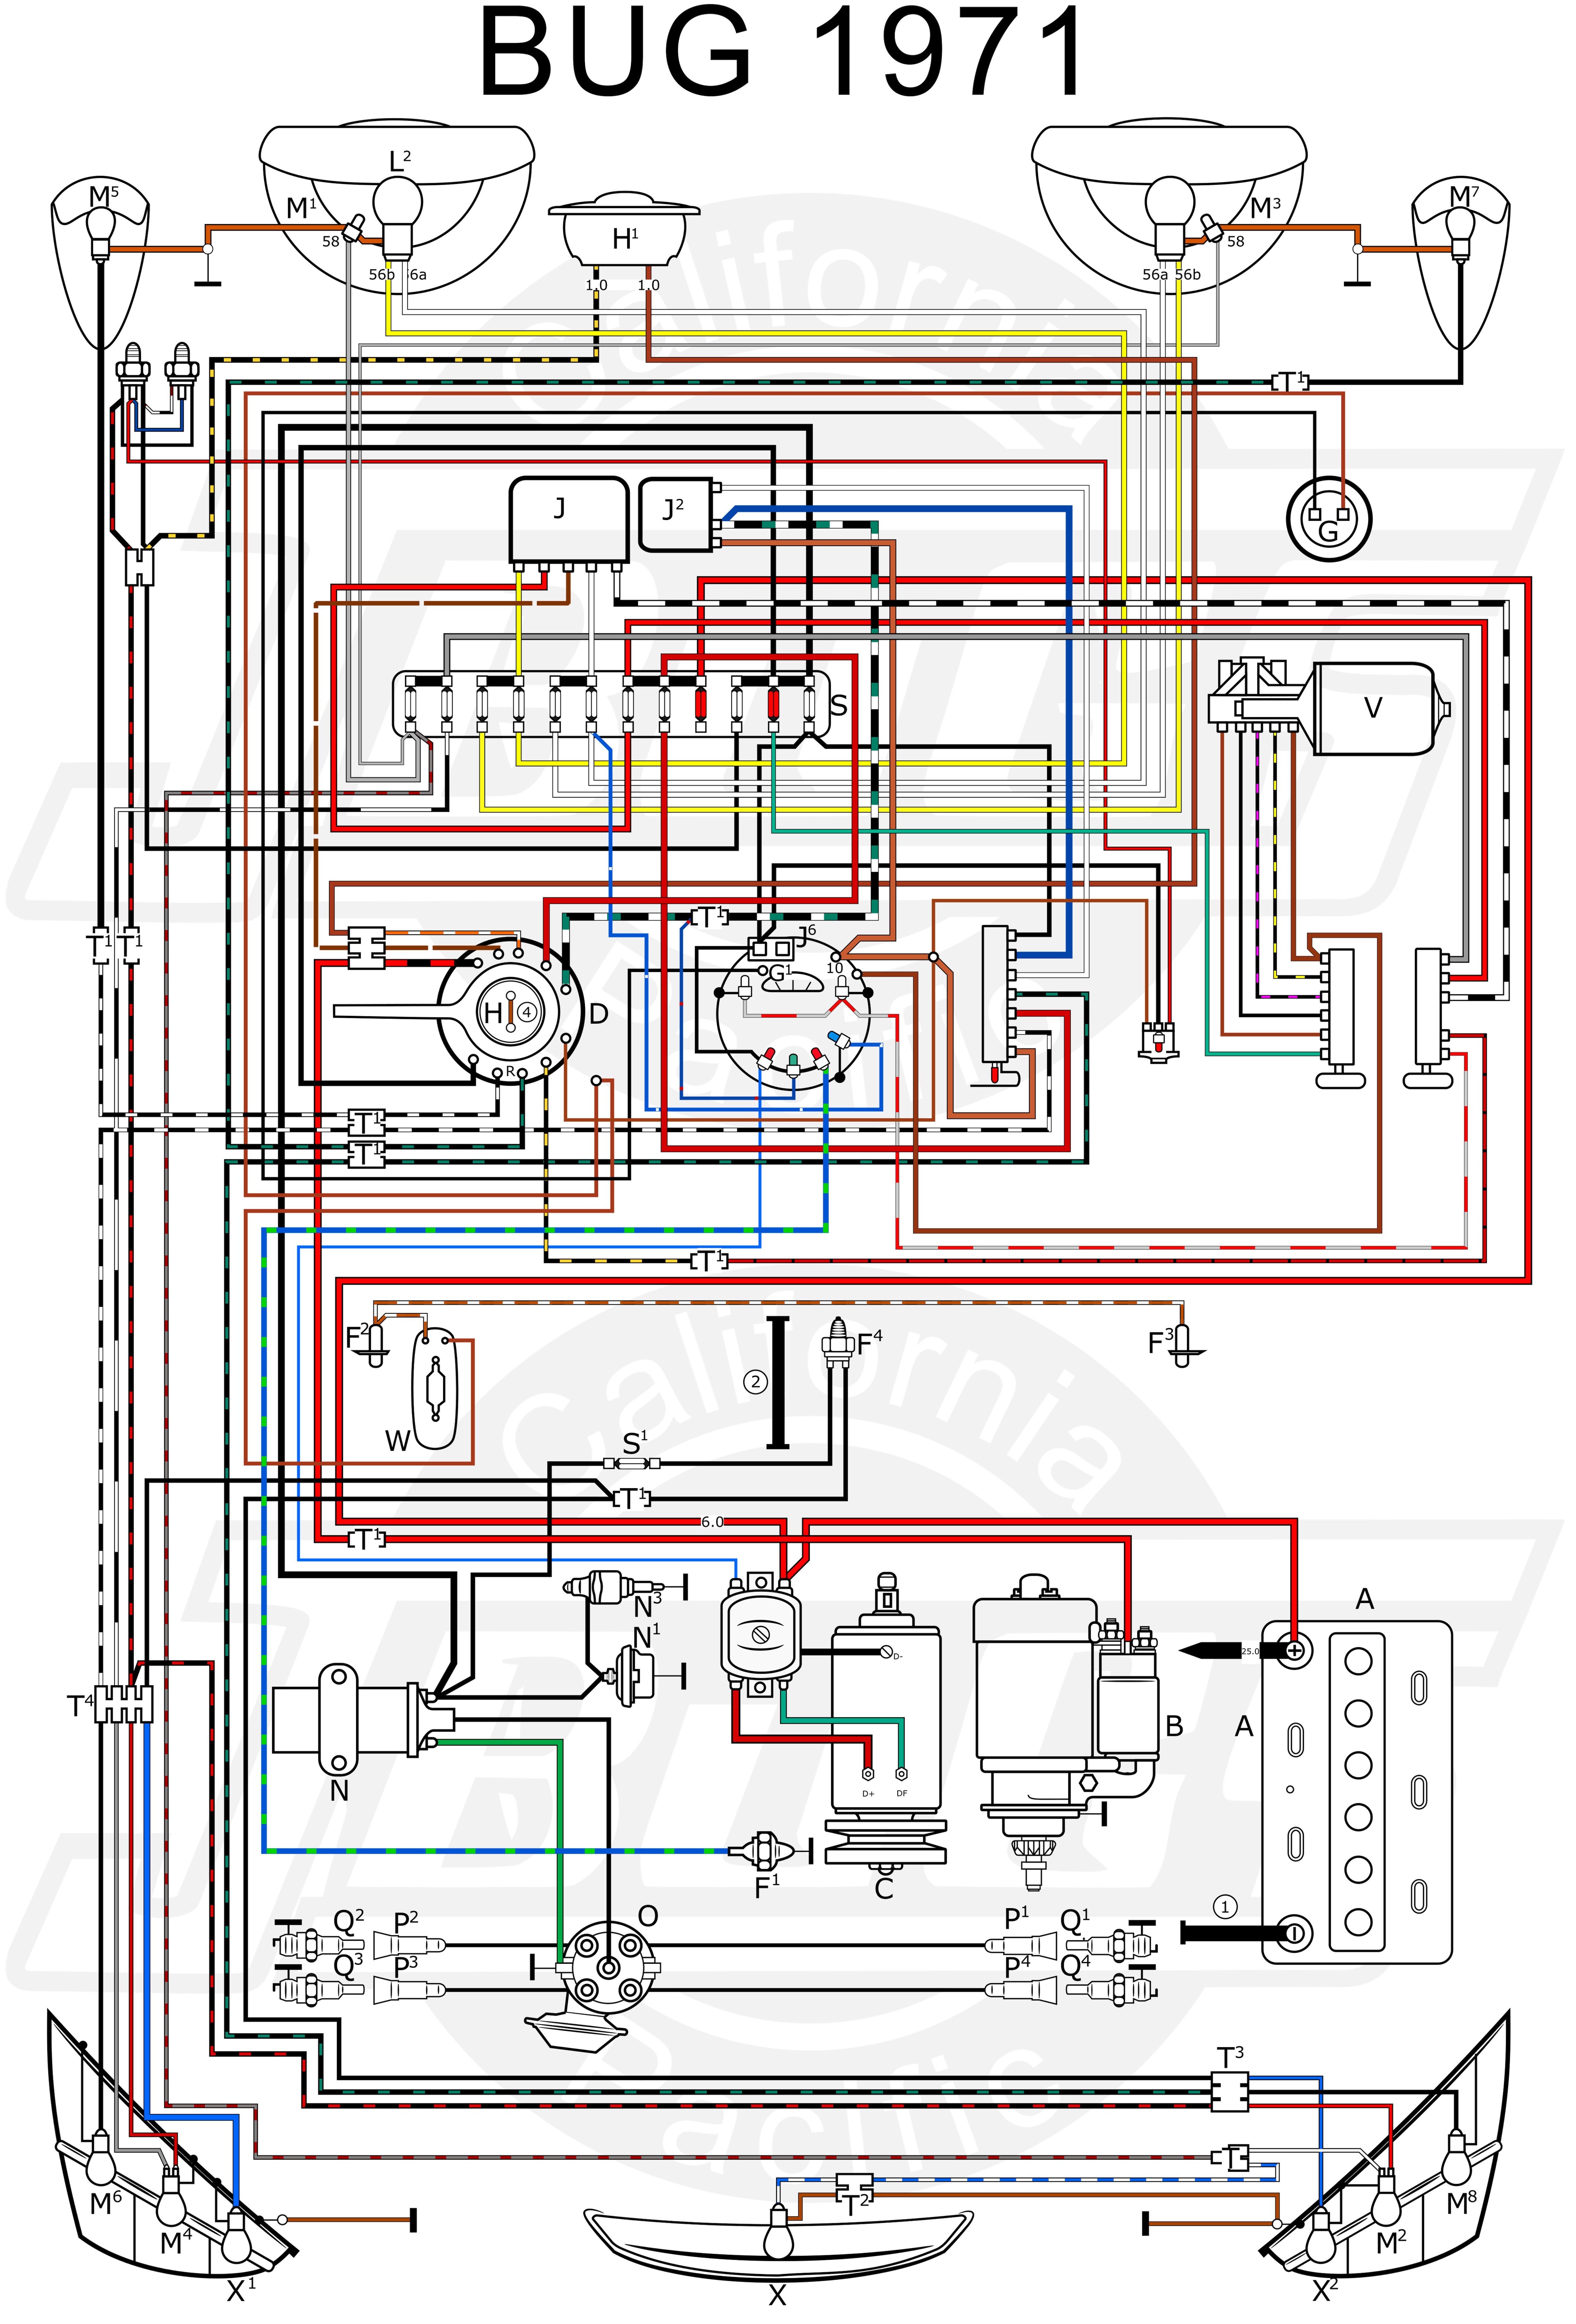 1971 vw beetle wiring diagram schematics wiring diagrams u2022 rh seniorlivinguniversity co 2012 Volkswagen Beetle Fuse